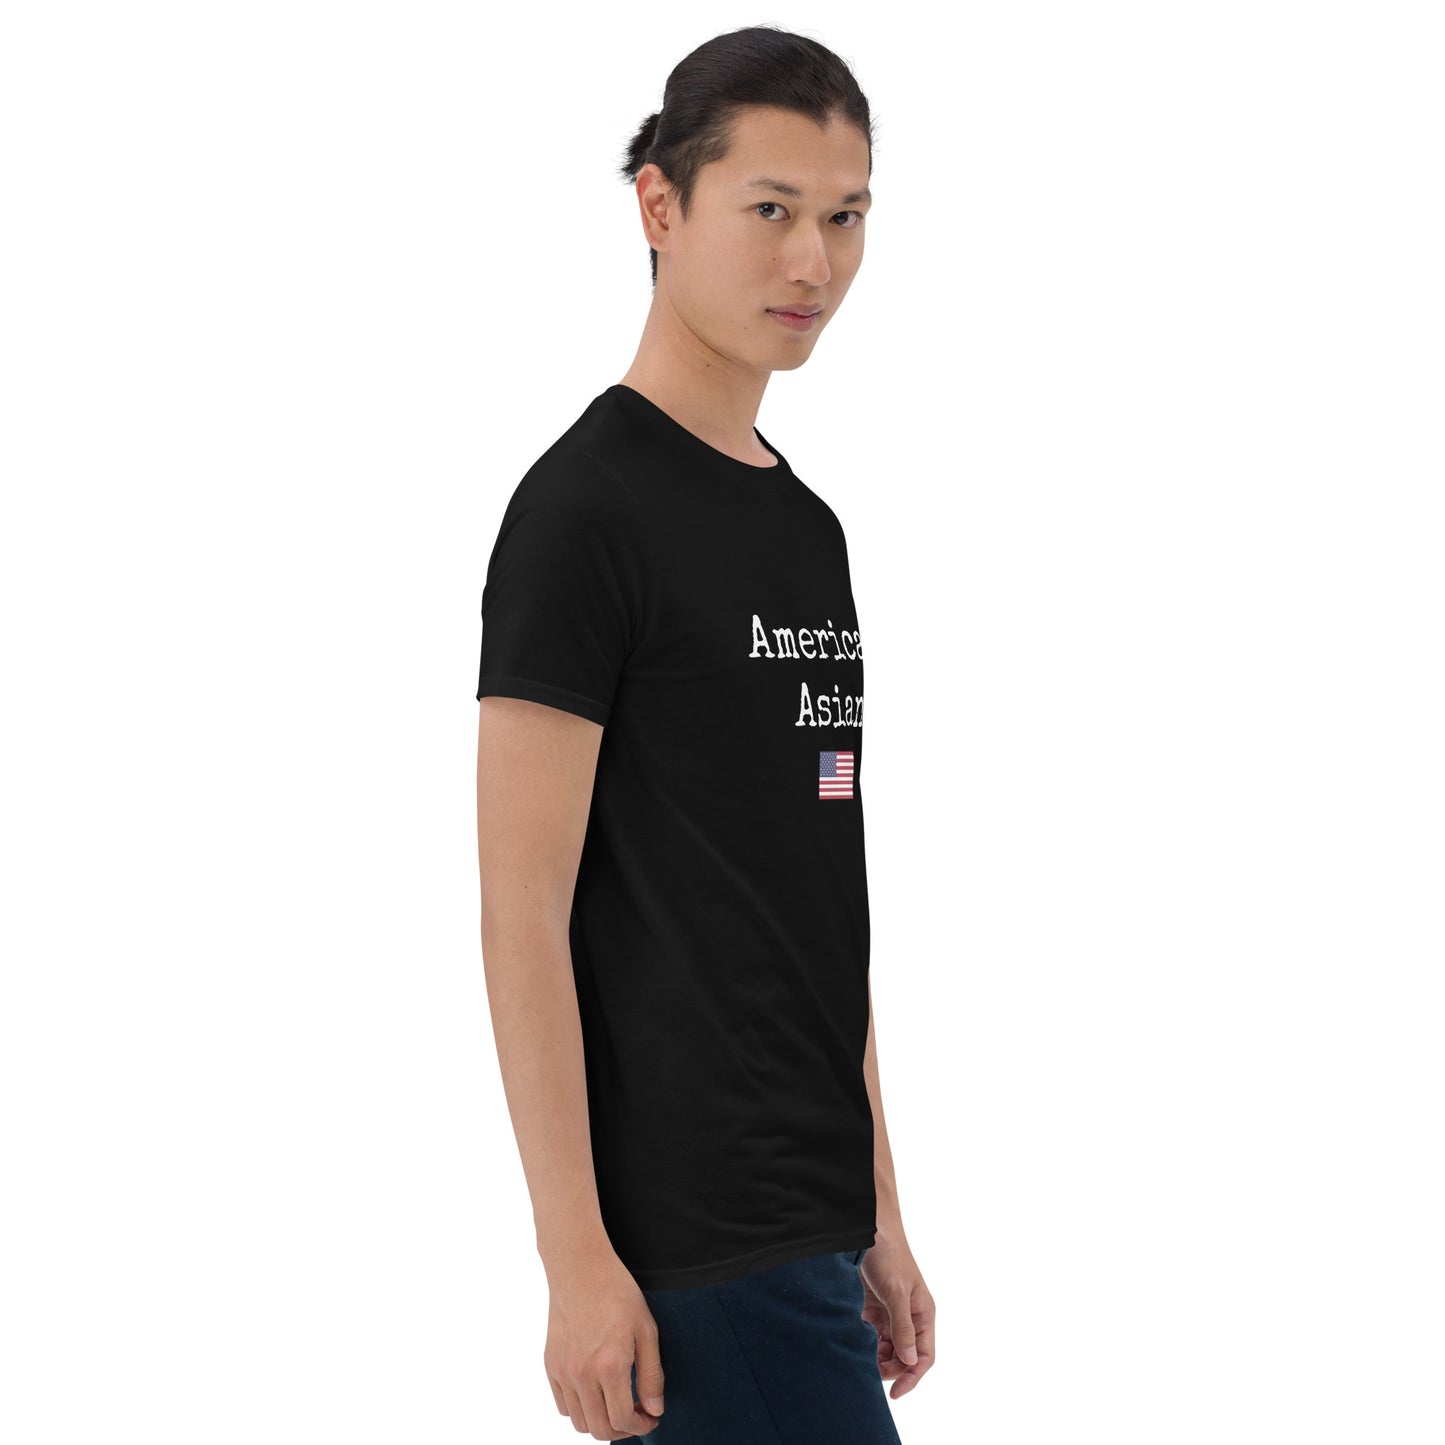 American Asian Short-Sleeve Unisex T-Shirt